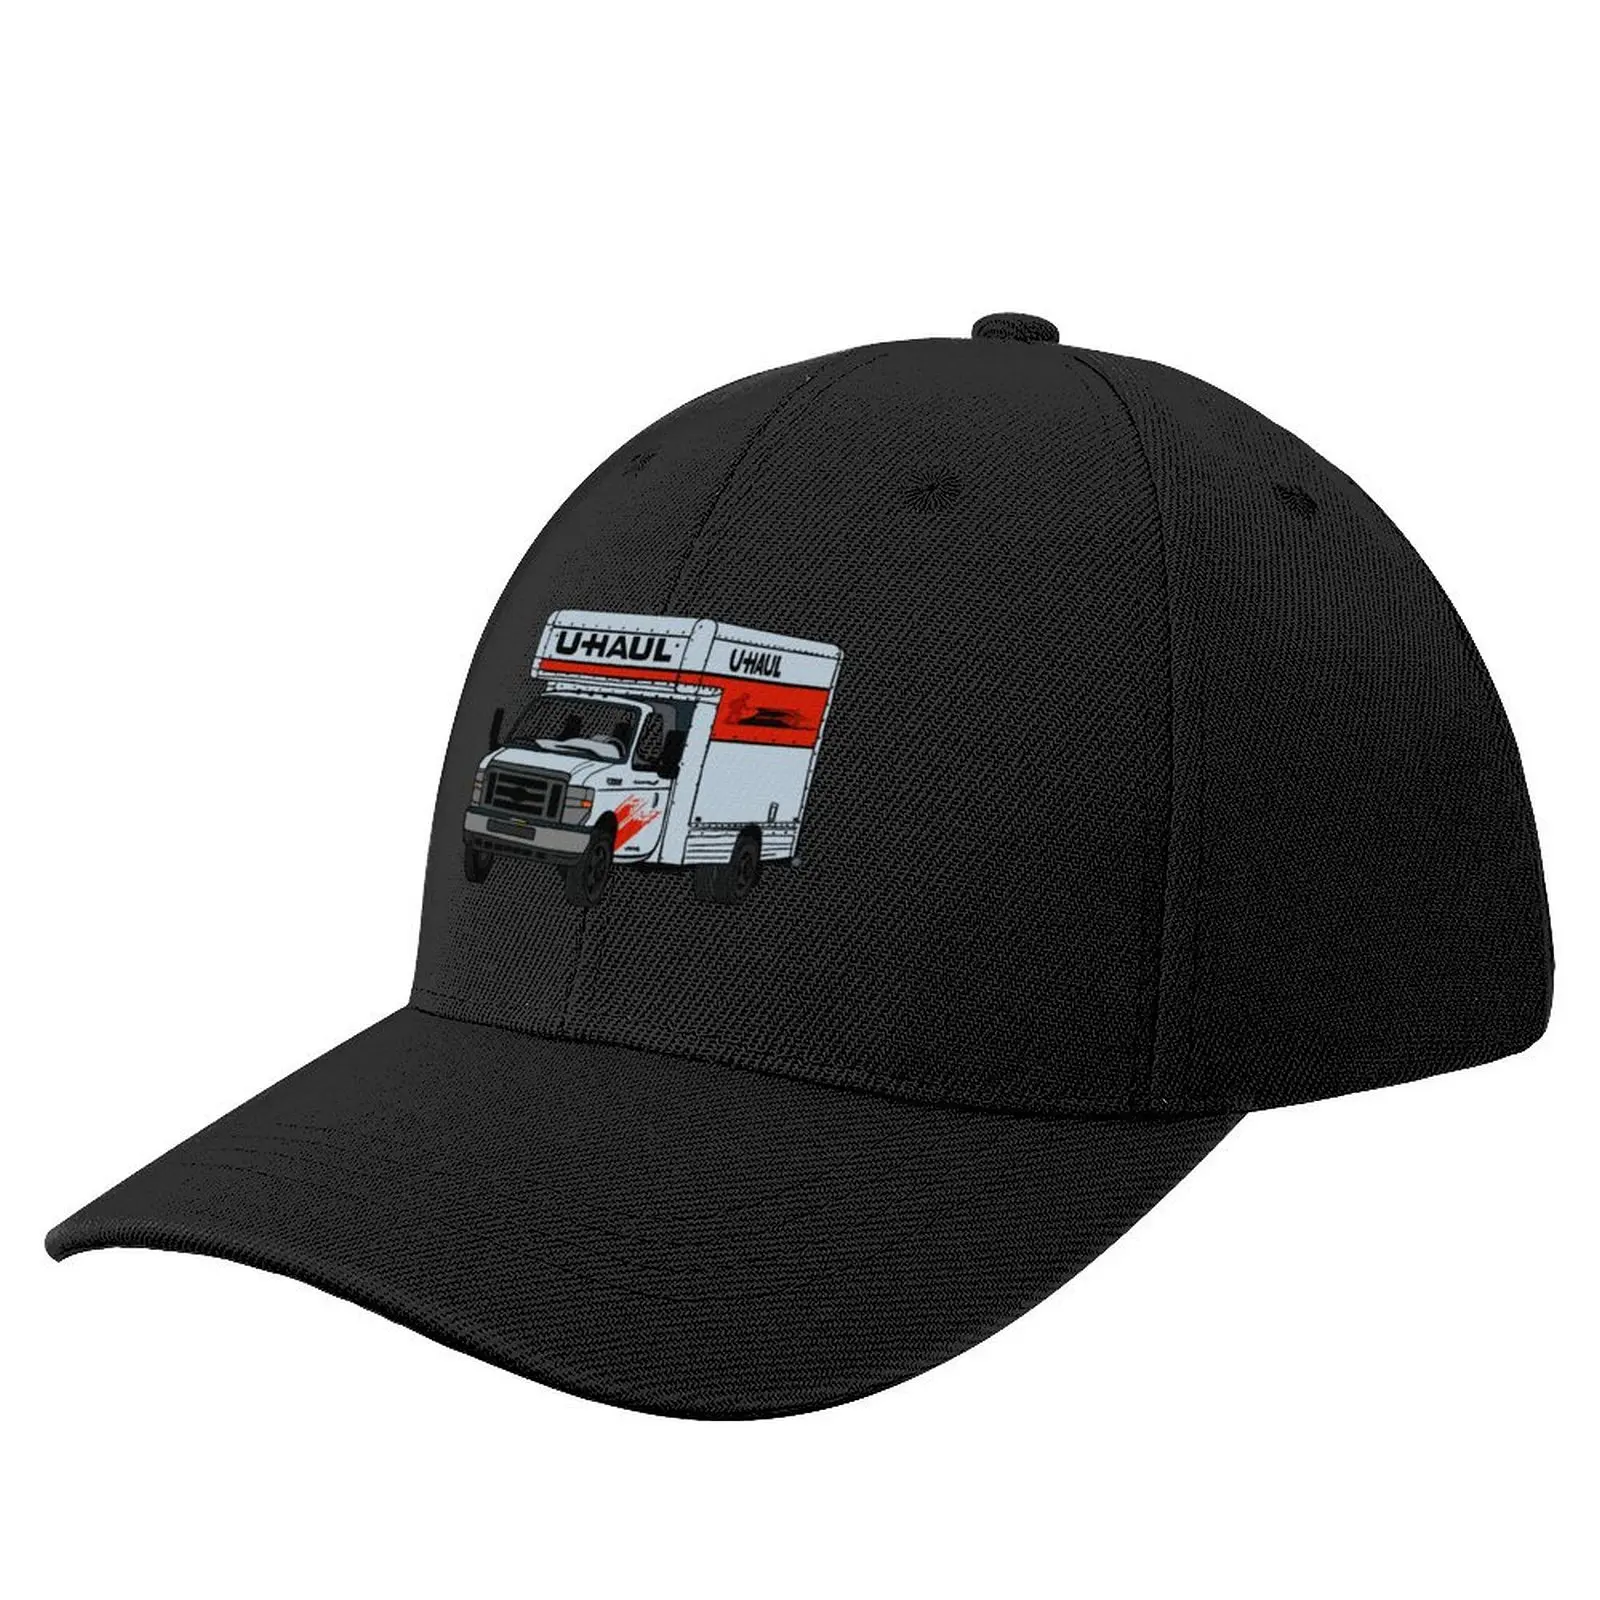 

Uhaul Truck Baseball Cap sun hat Military Tactical Cap Luxury Brand Golf Wear Men Women's